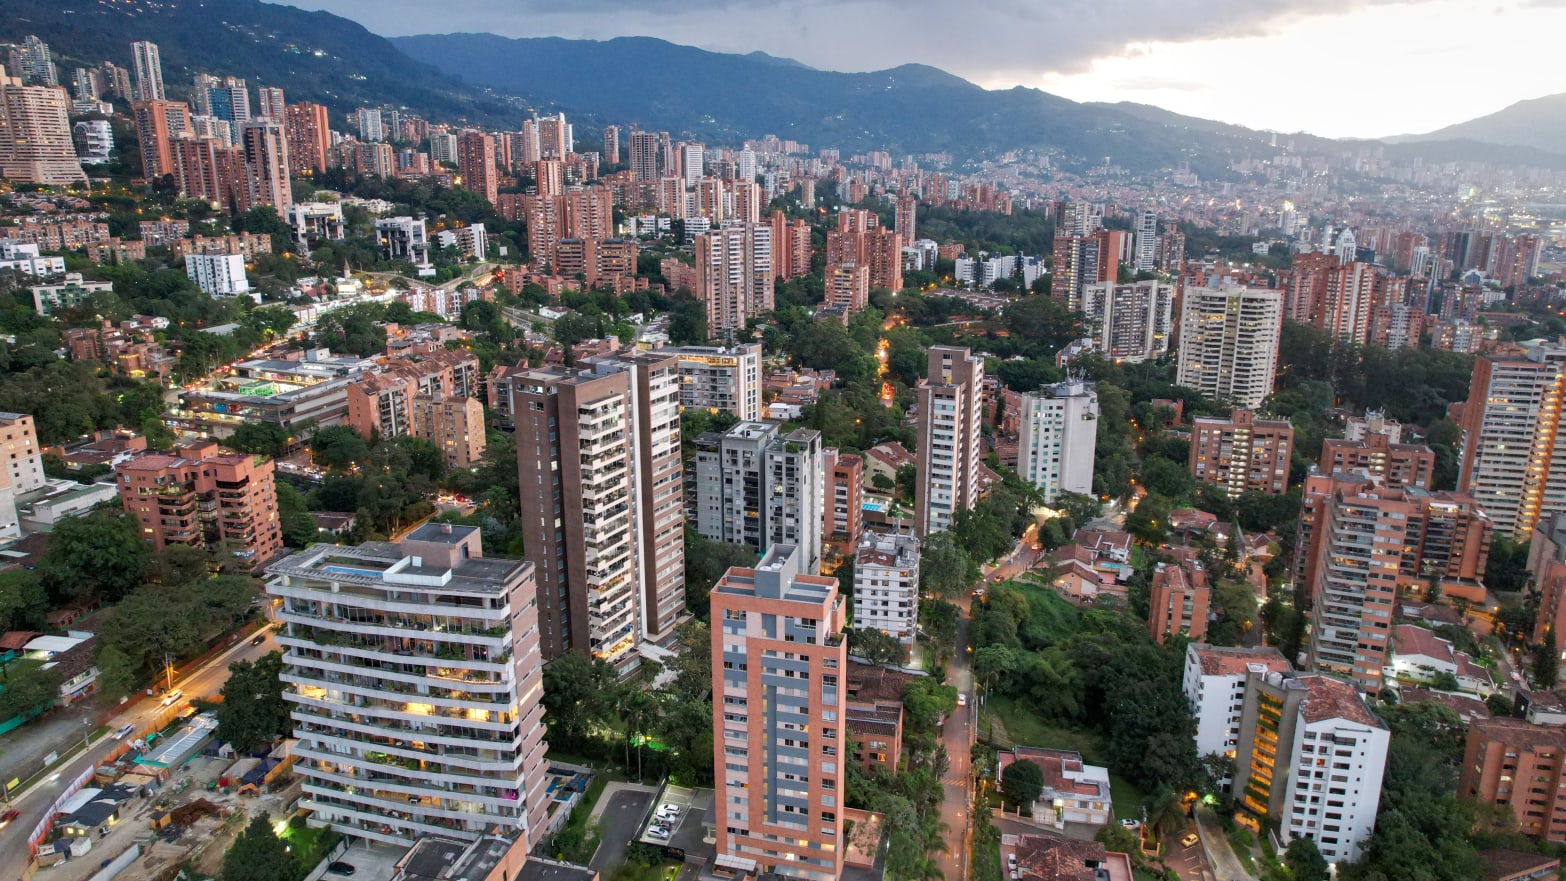 Aerial views of Medellin, Colombia